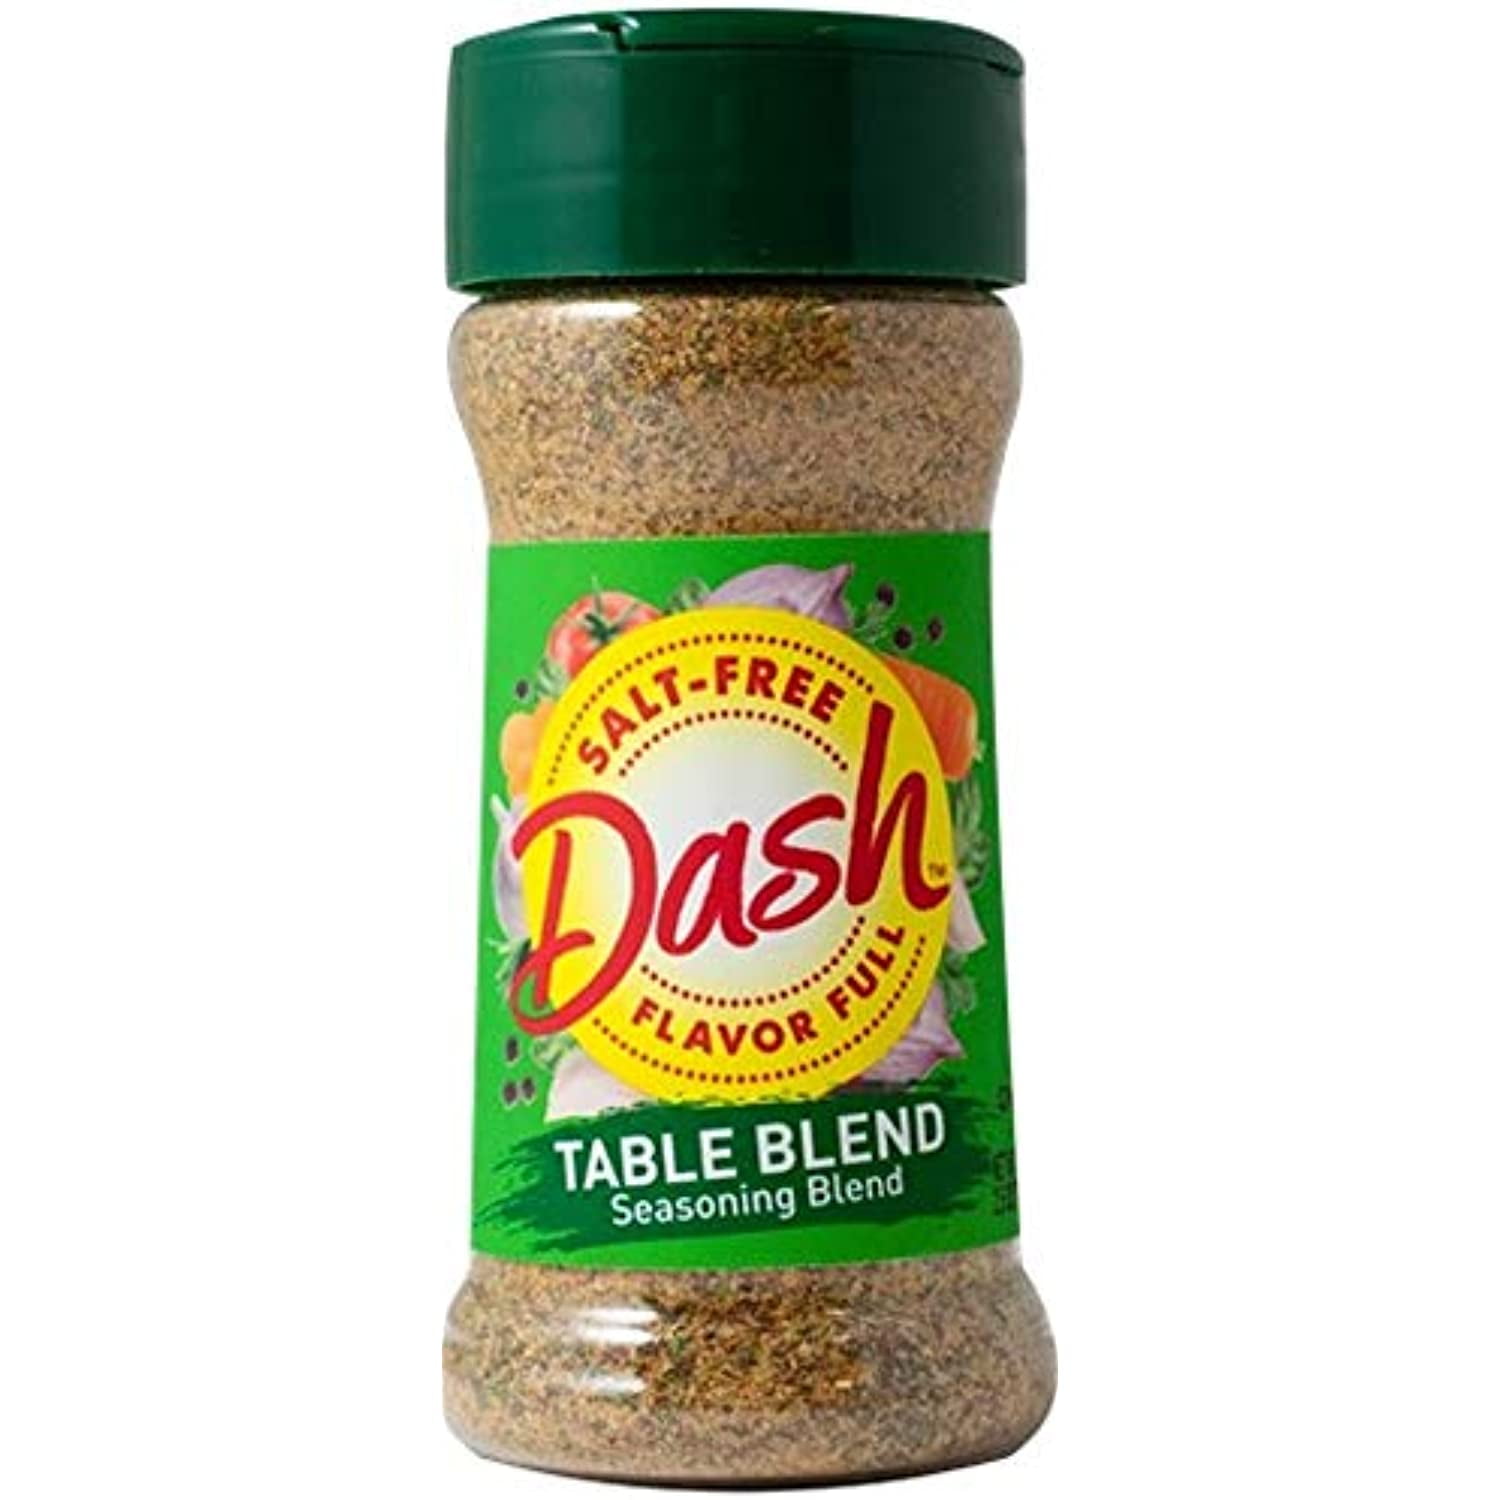 Mrs. Dash Salt-Free Seasonings » The Daily Dish